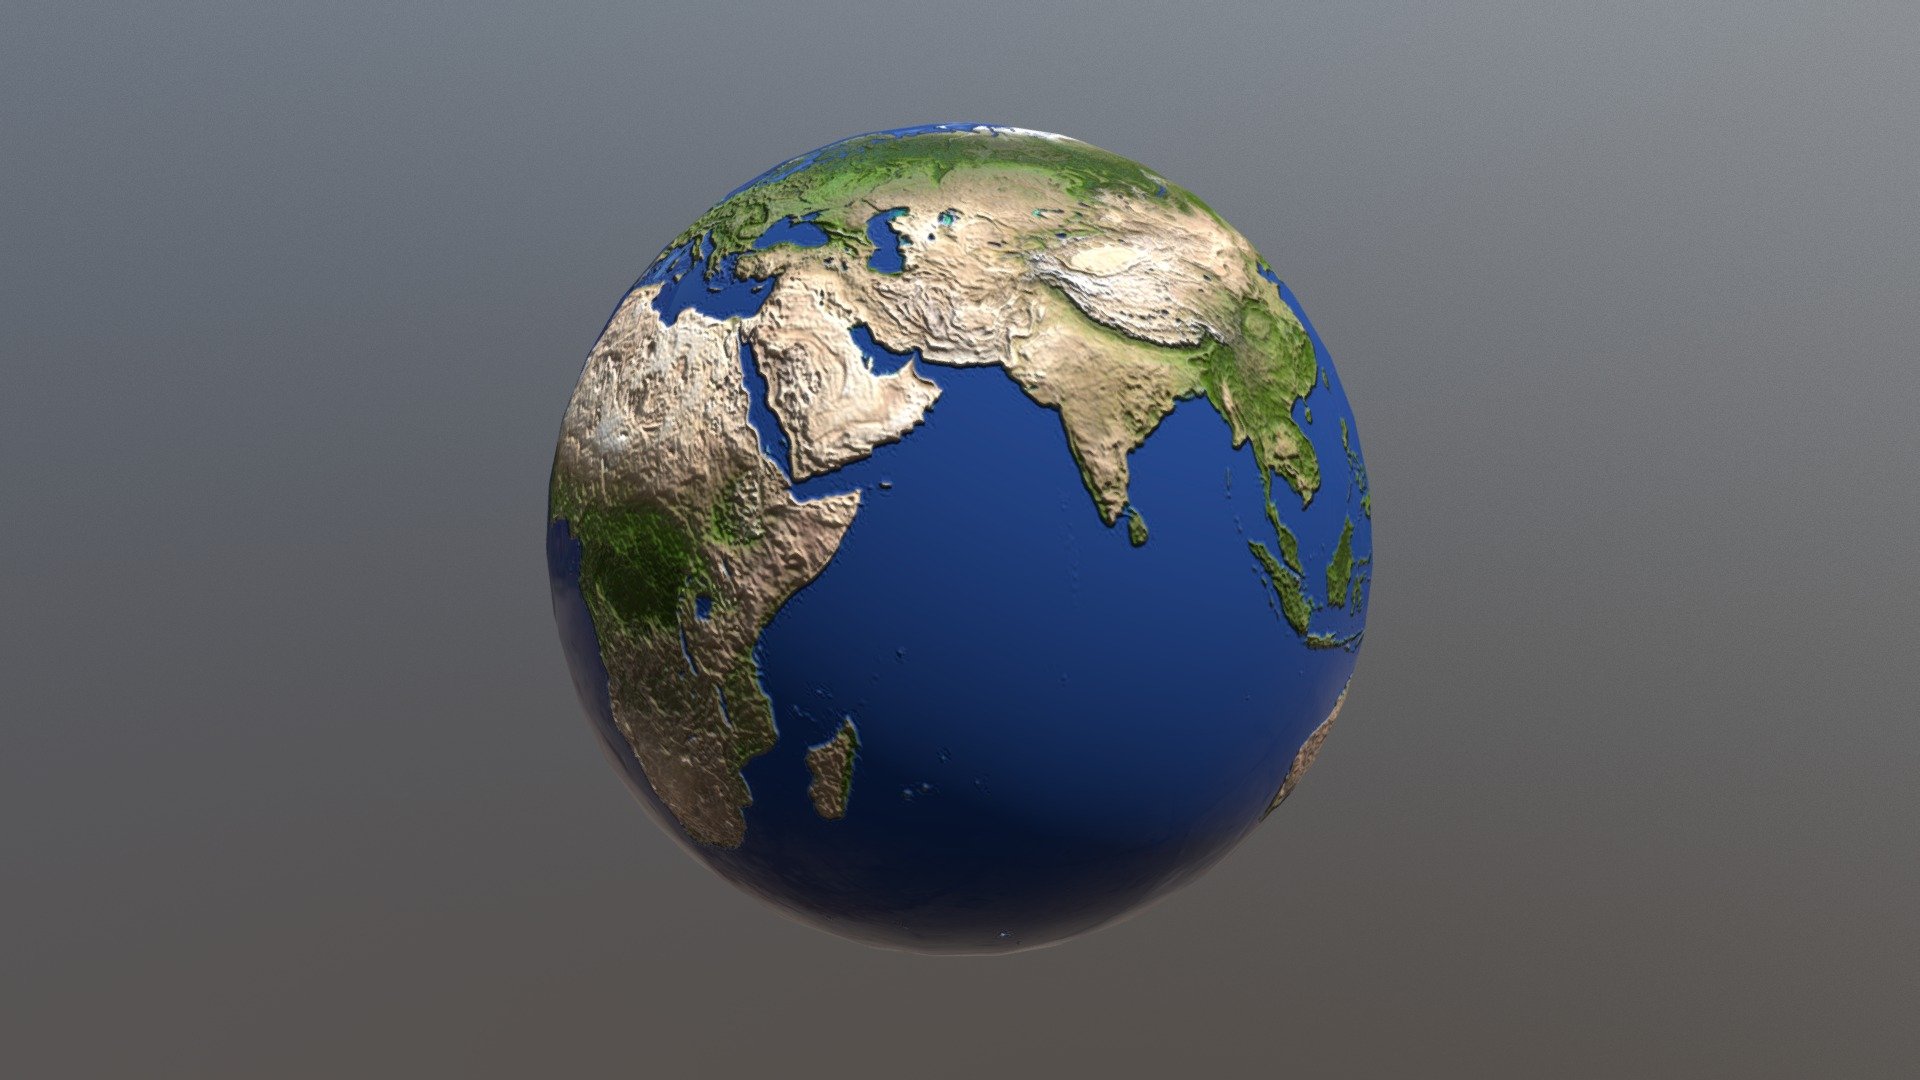 earth 3d model, download royalty free @ ghantee.com - Earth - 3D model by ghantee 3d model